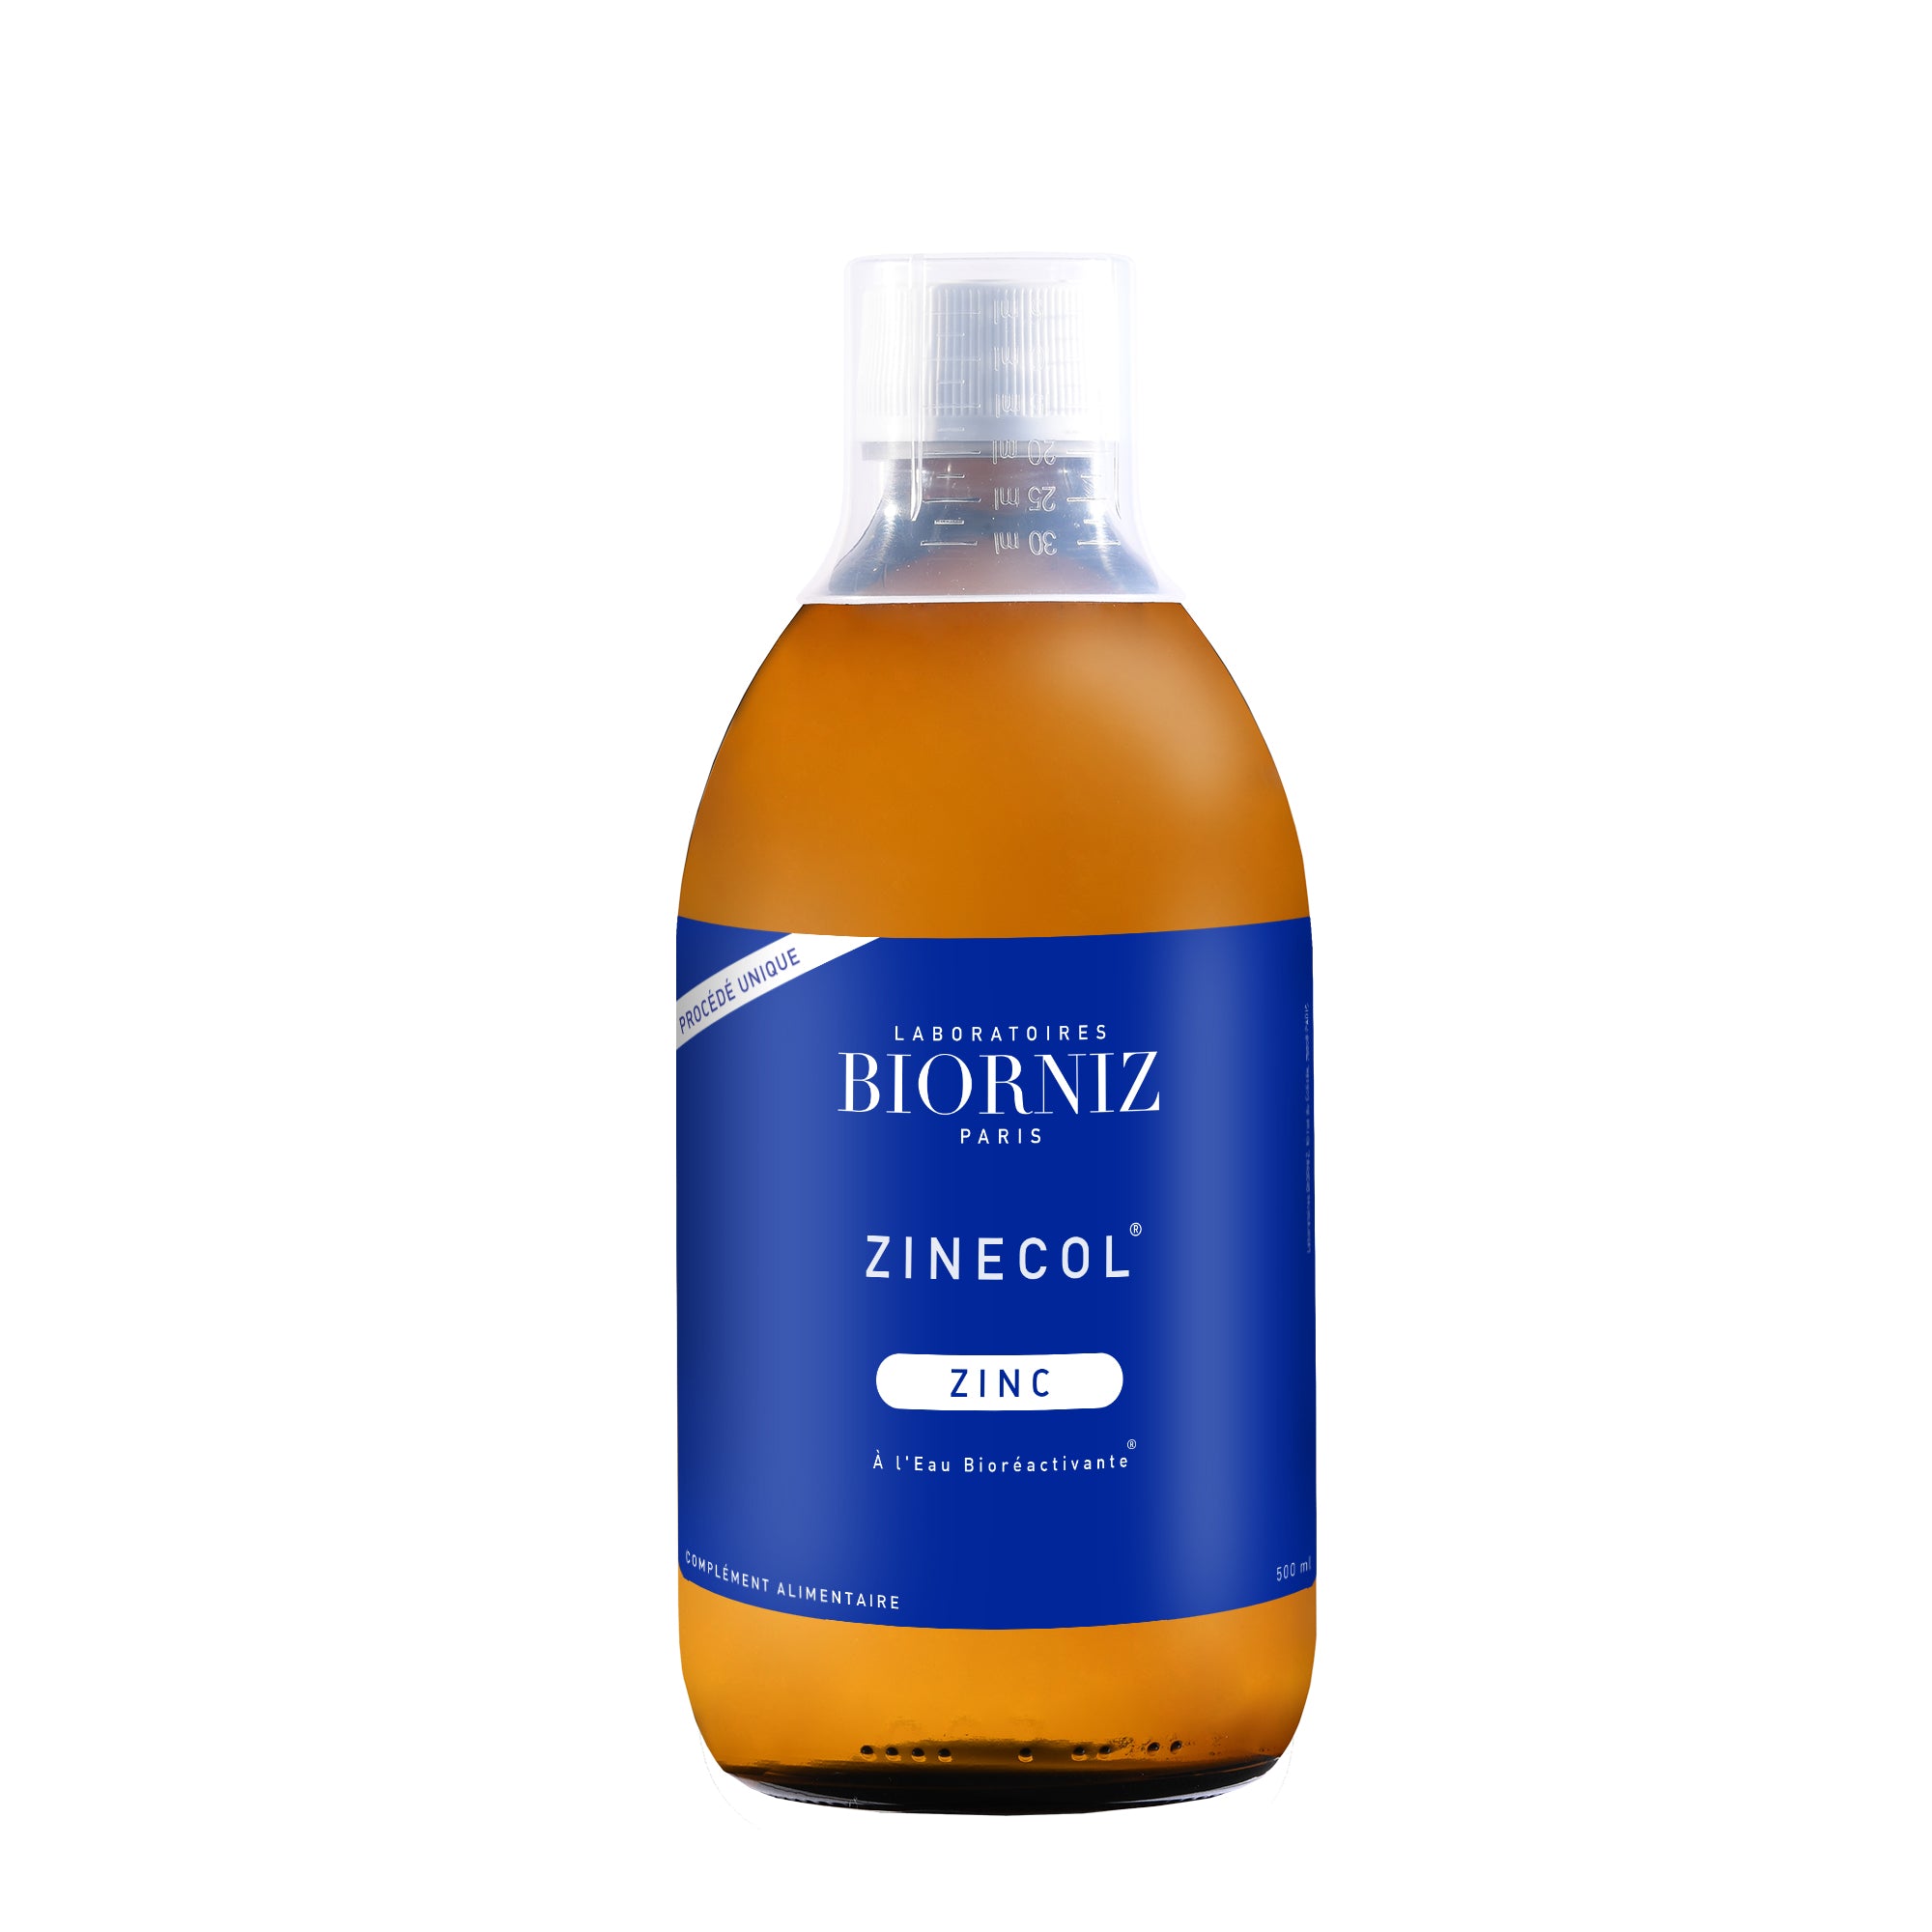 ZINECOL® Zinc liquide